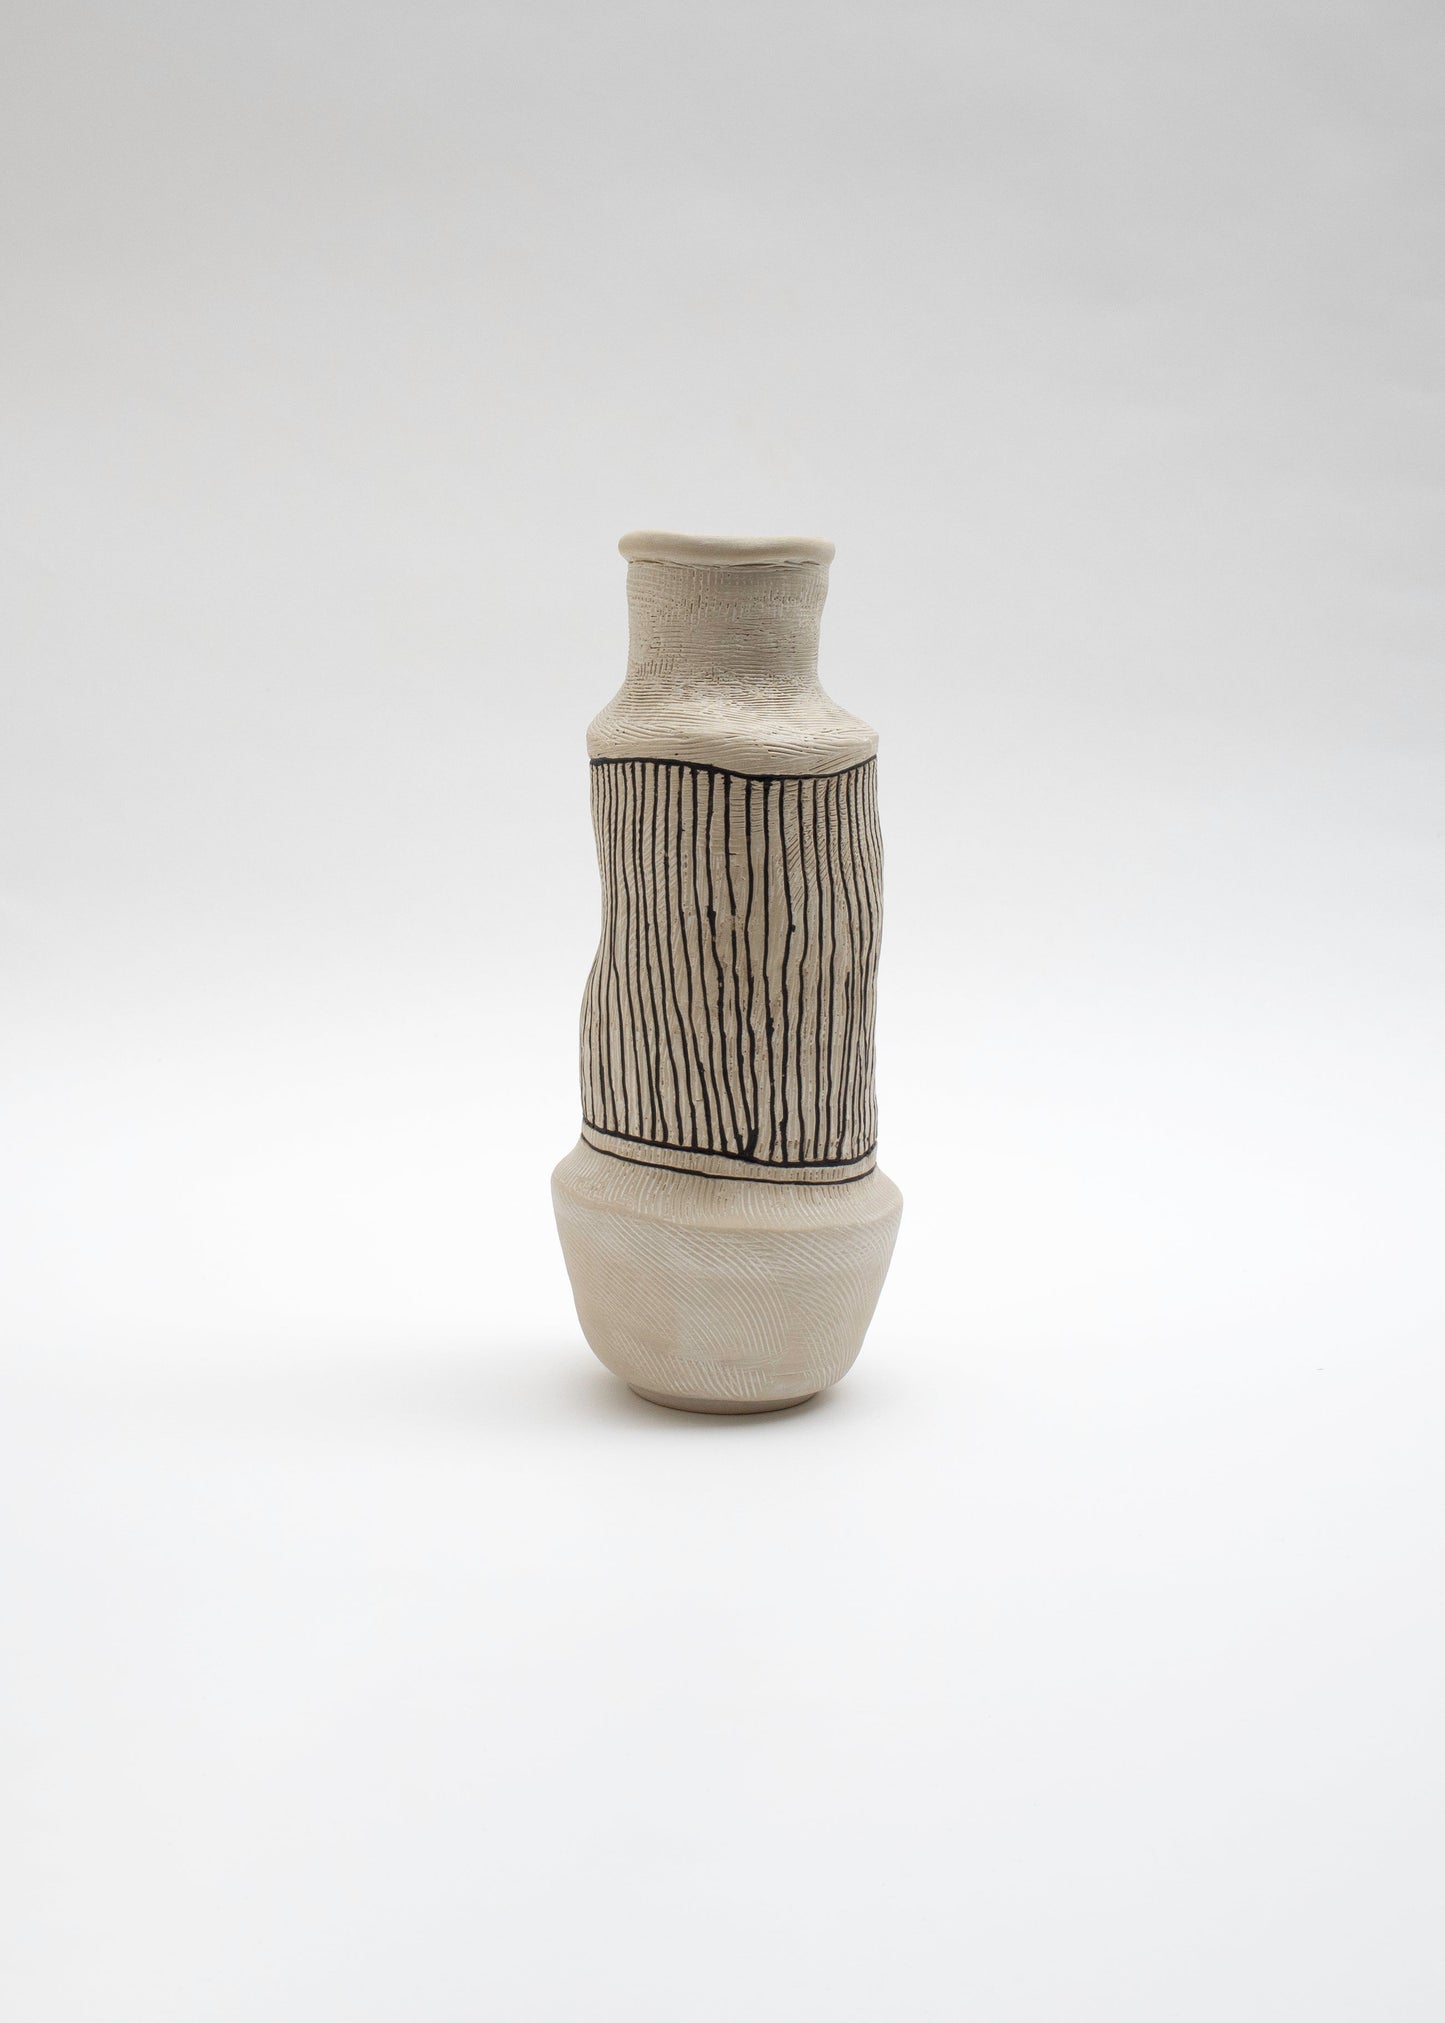 Kuro No. 3 by Egle Simkus Vases